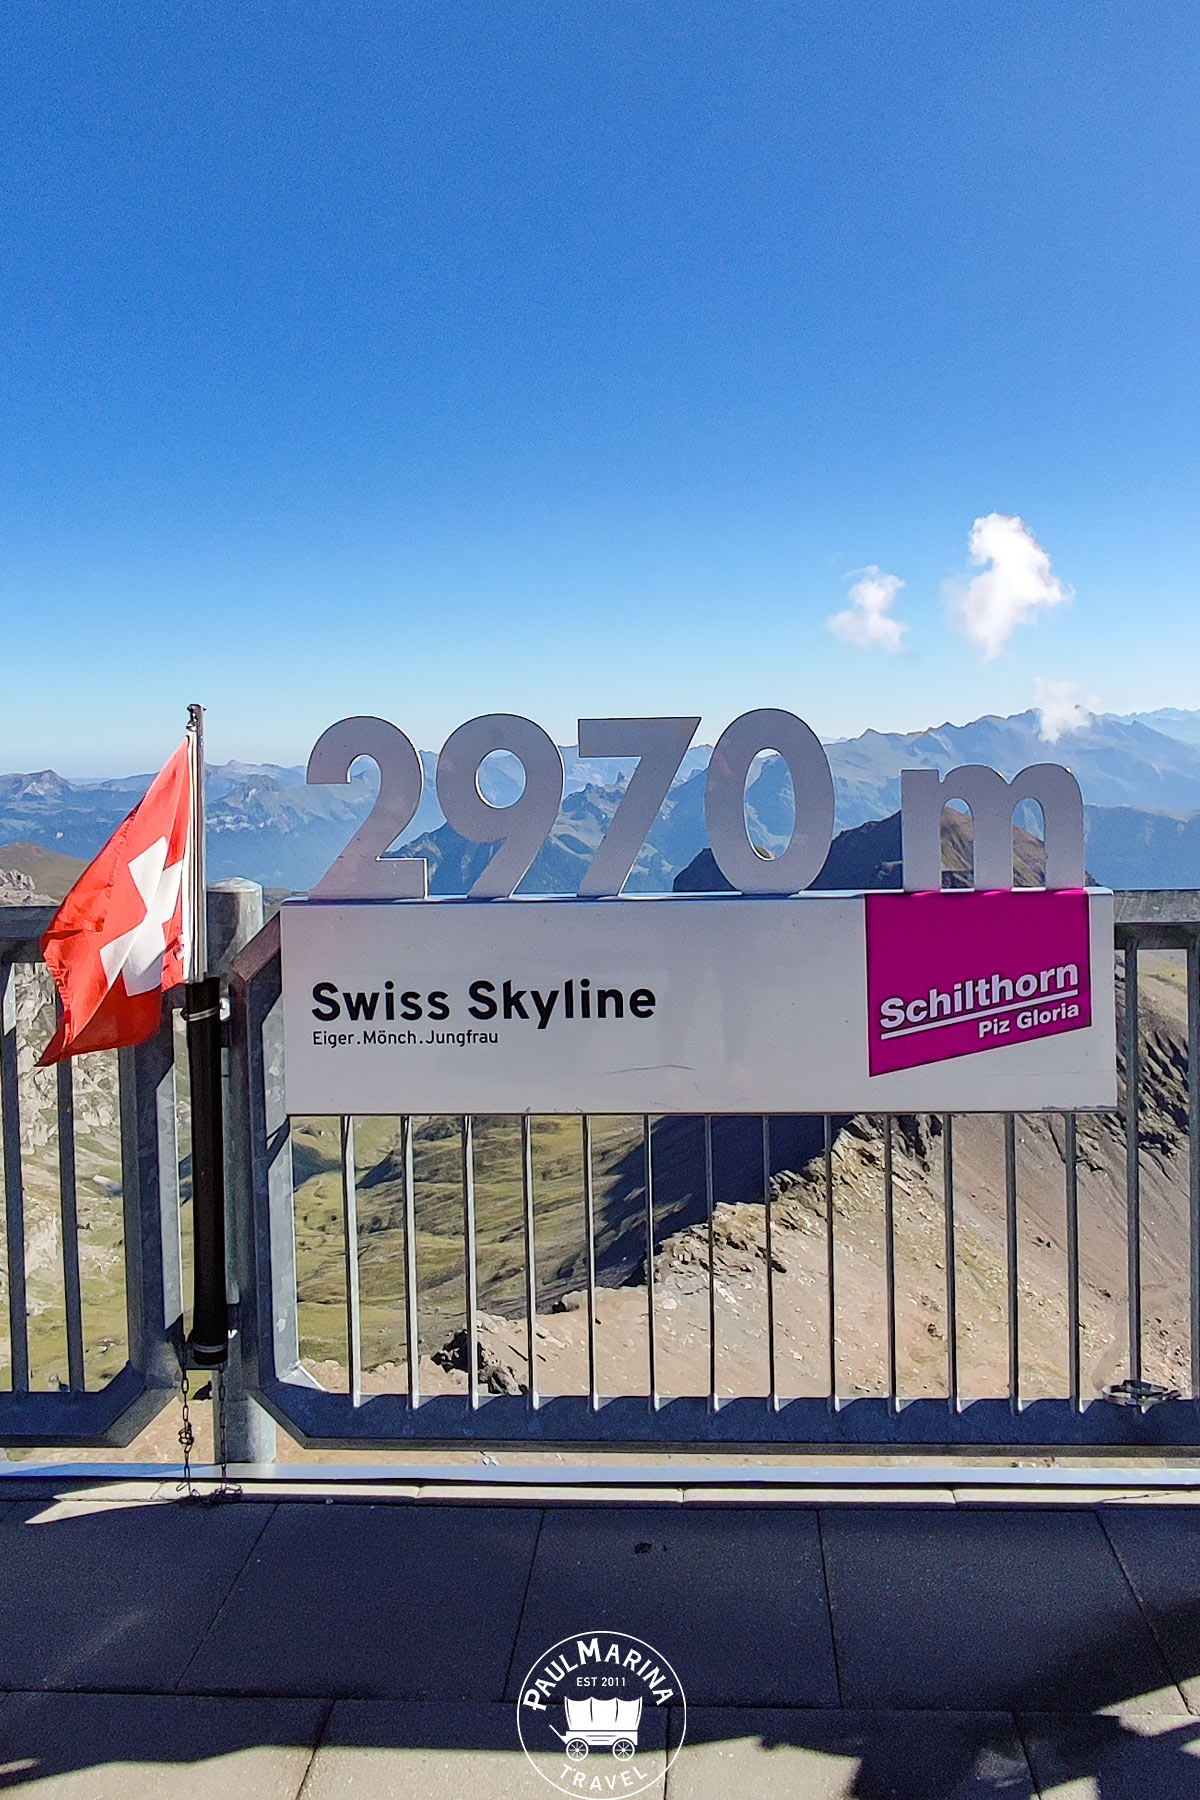 Swiss Skyline 2970 m